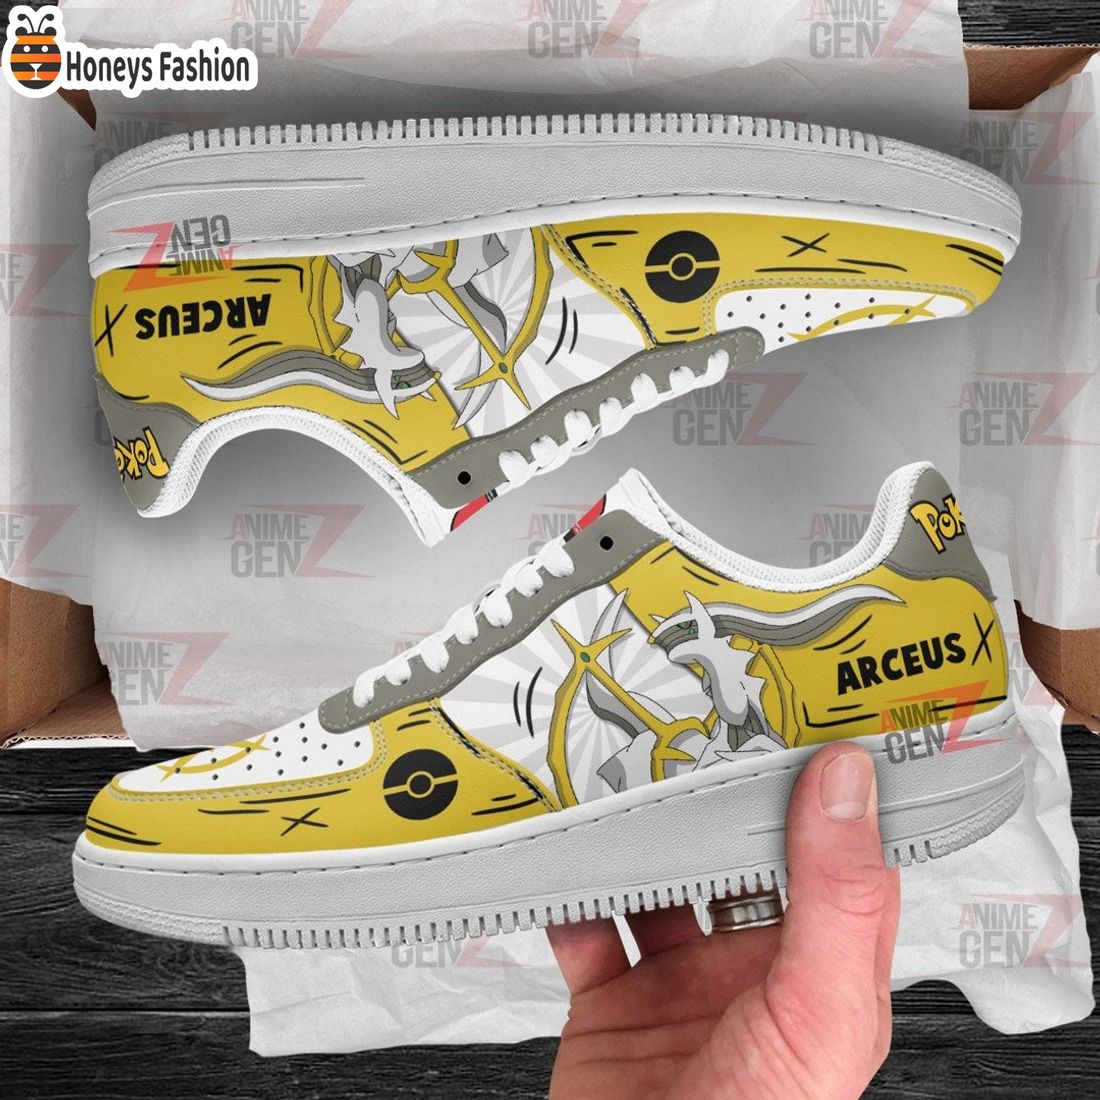 Pokemon Arceus Air Force 1 Sneakers